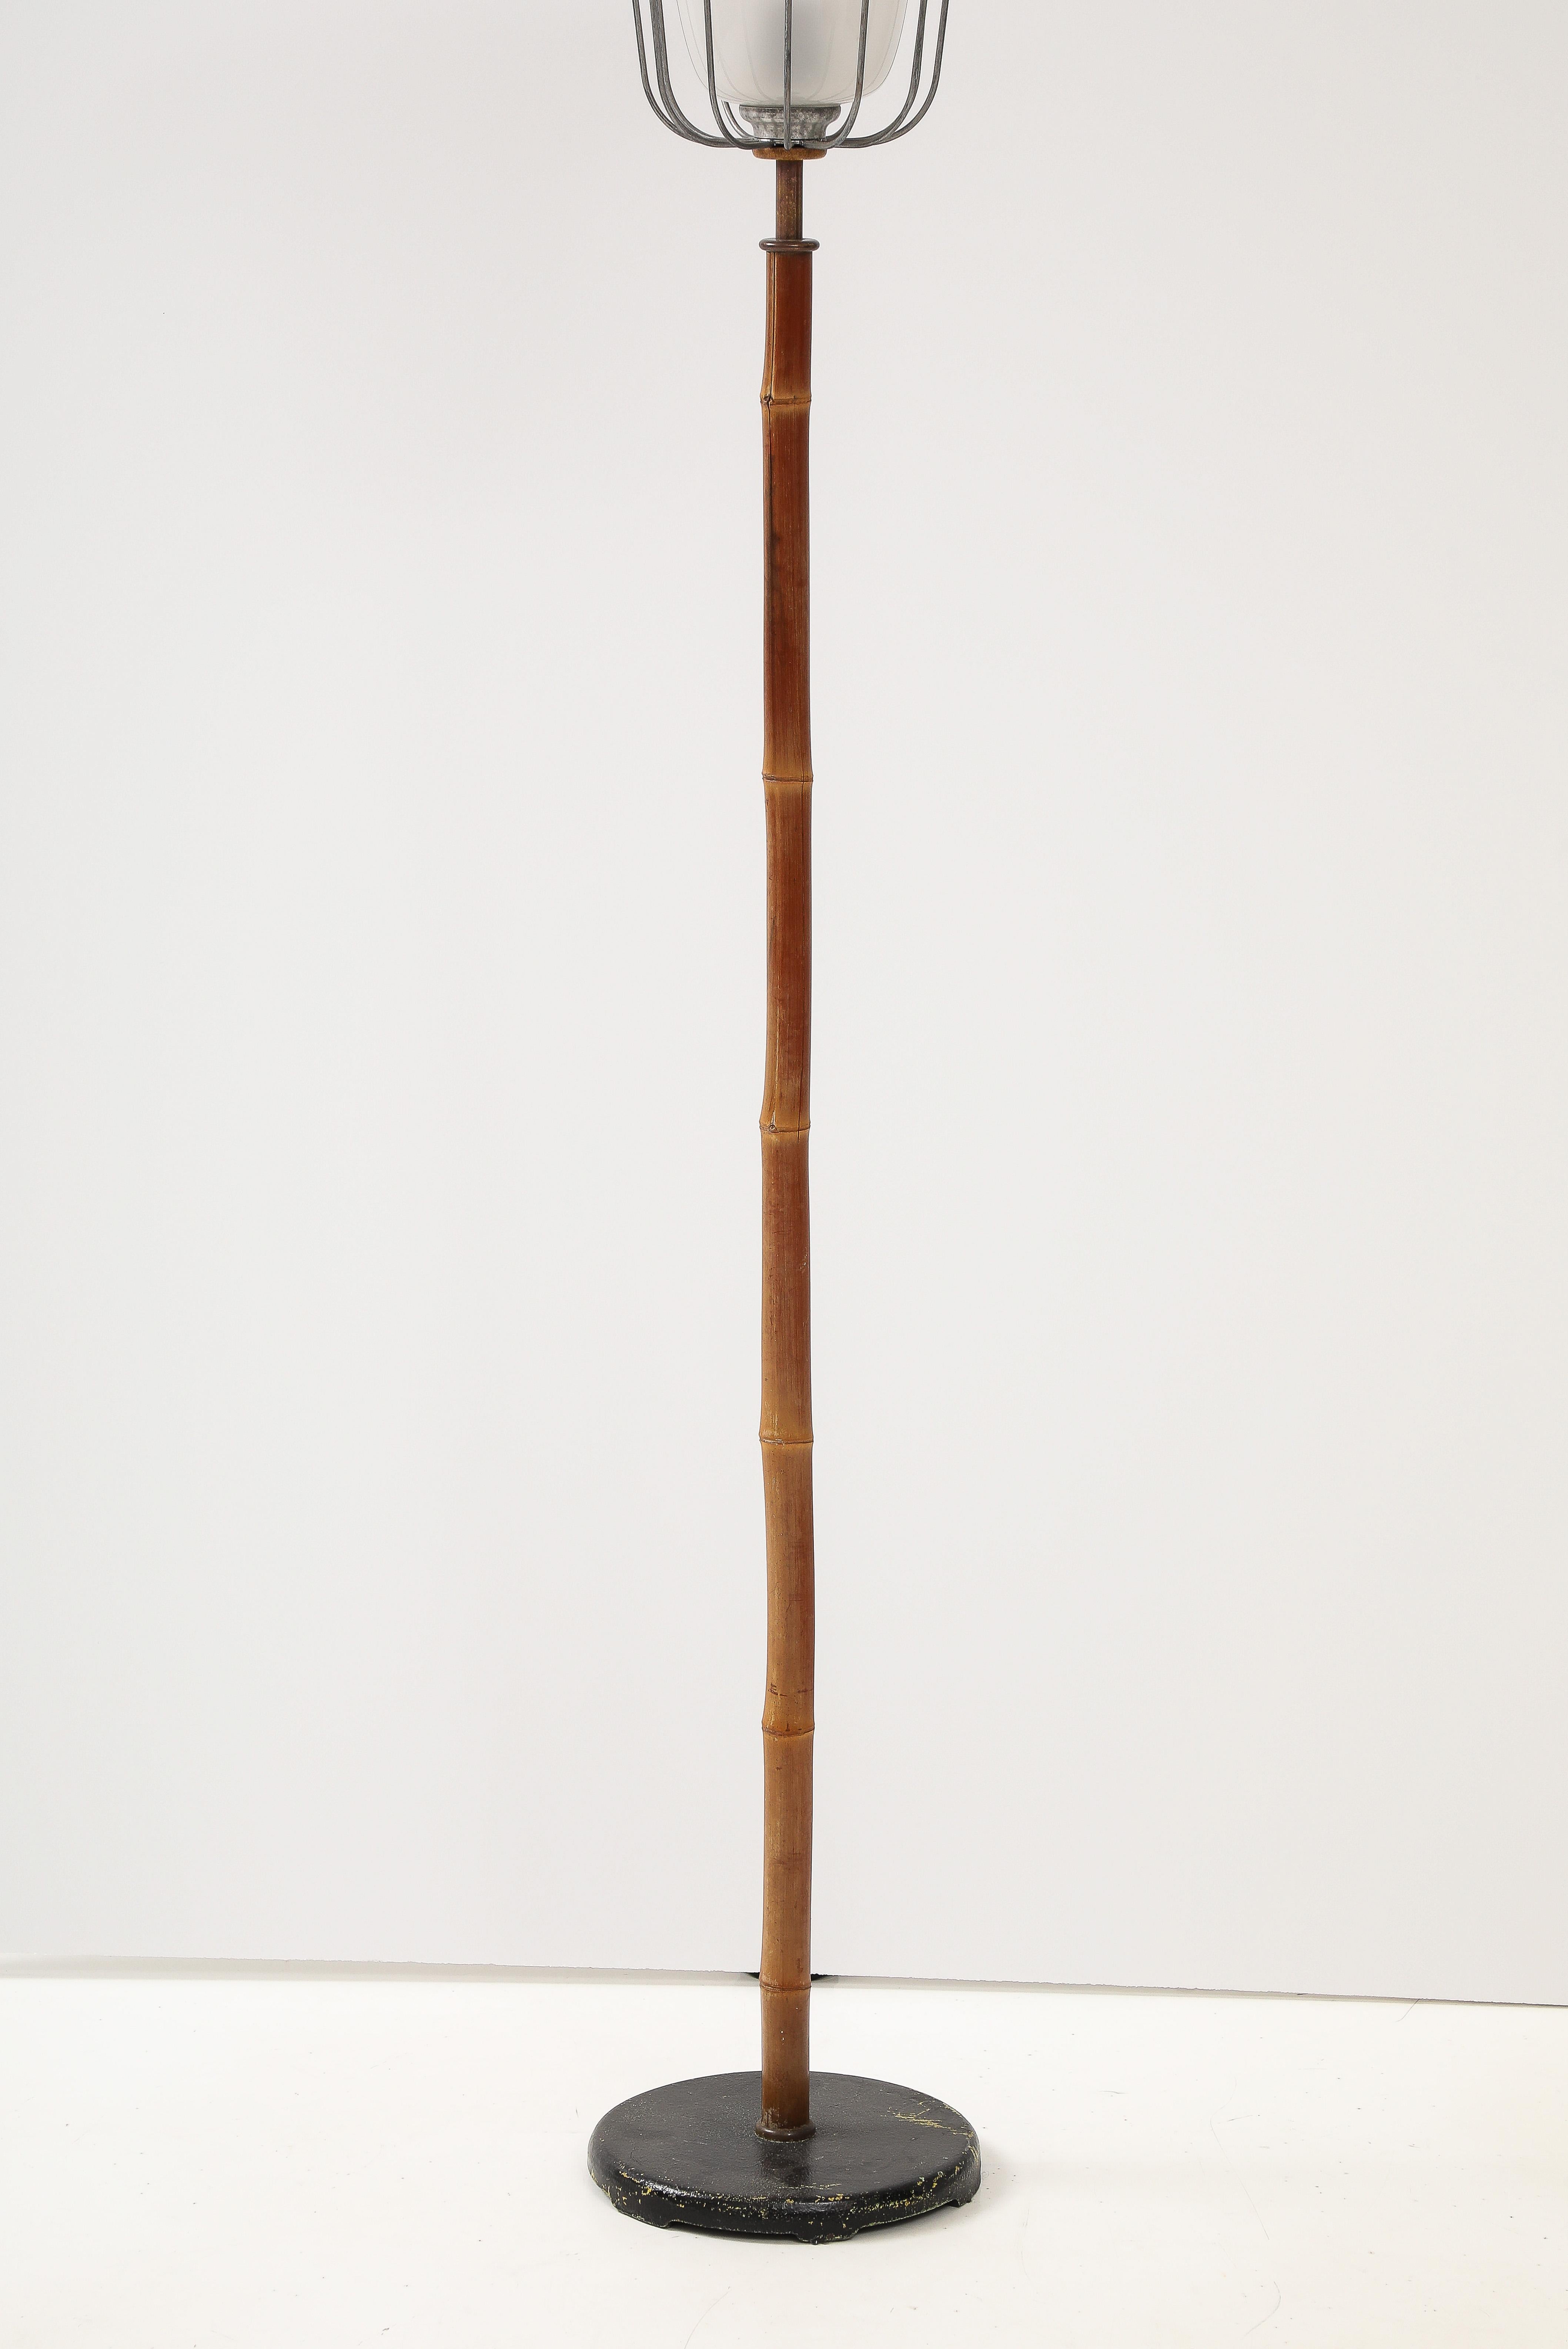 Rarest Kalmar Bamboo Floor Lamp n°2081 - Austria 1960's For Sale 2